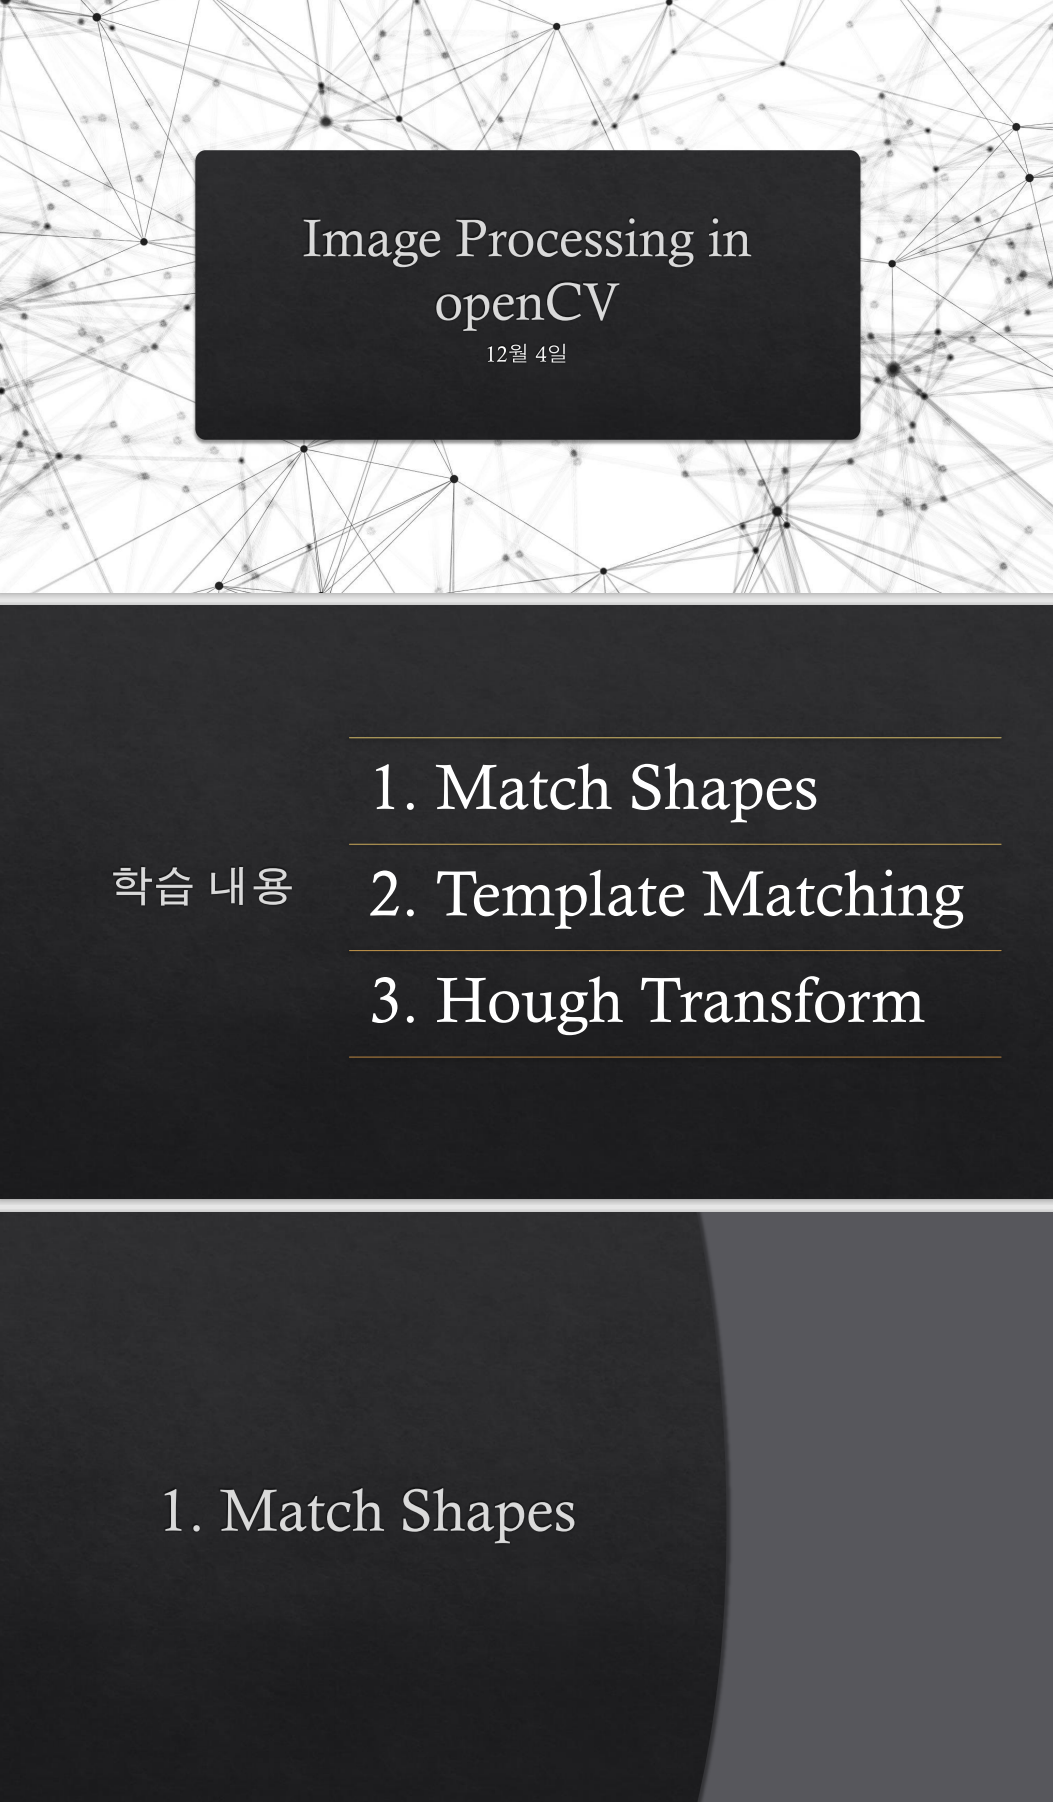 [openCV] Match Shapes, Template Matching, Hough Transform